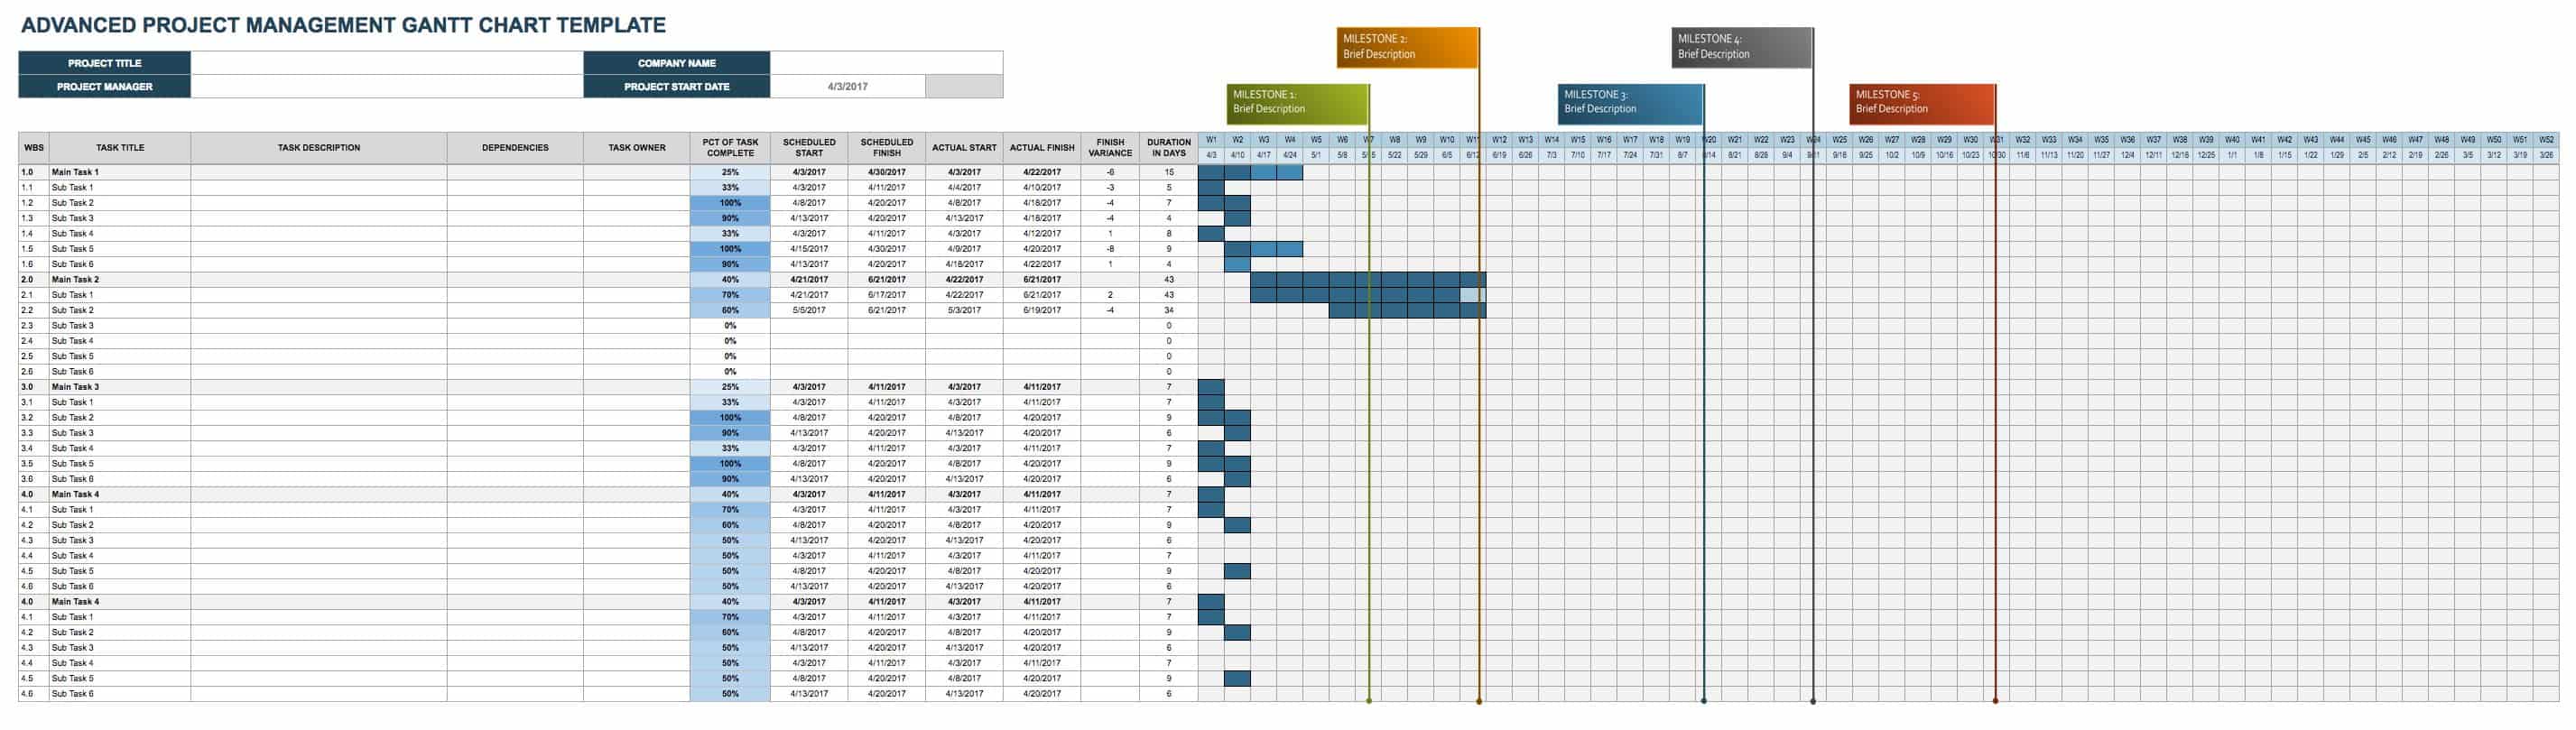 excel project calendar template